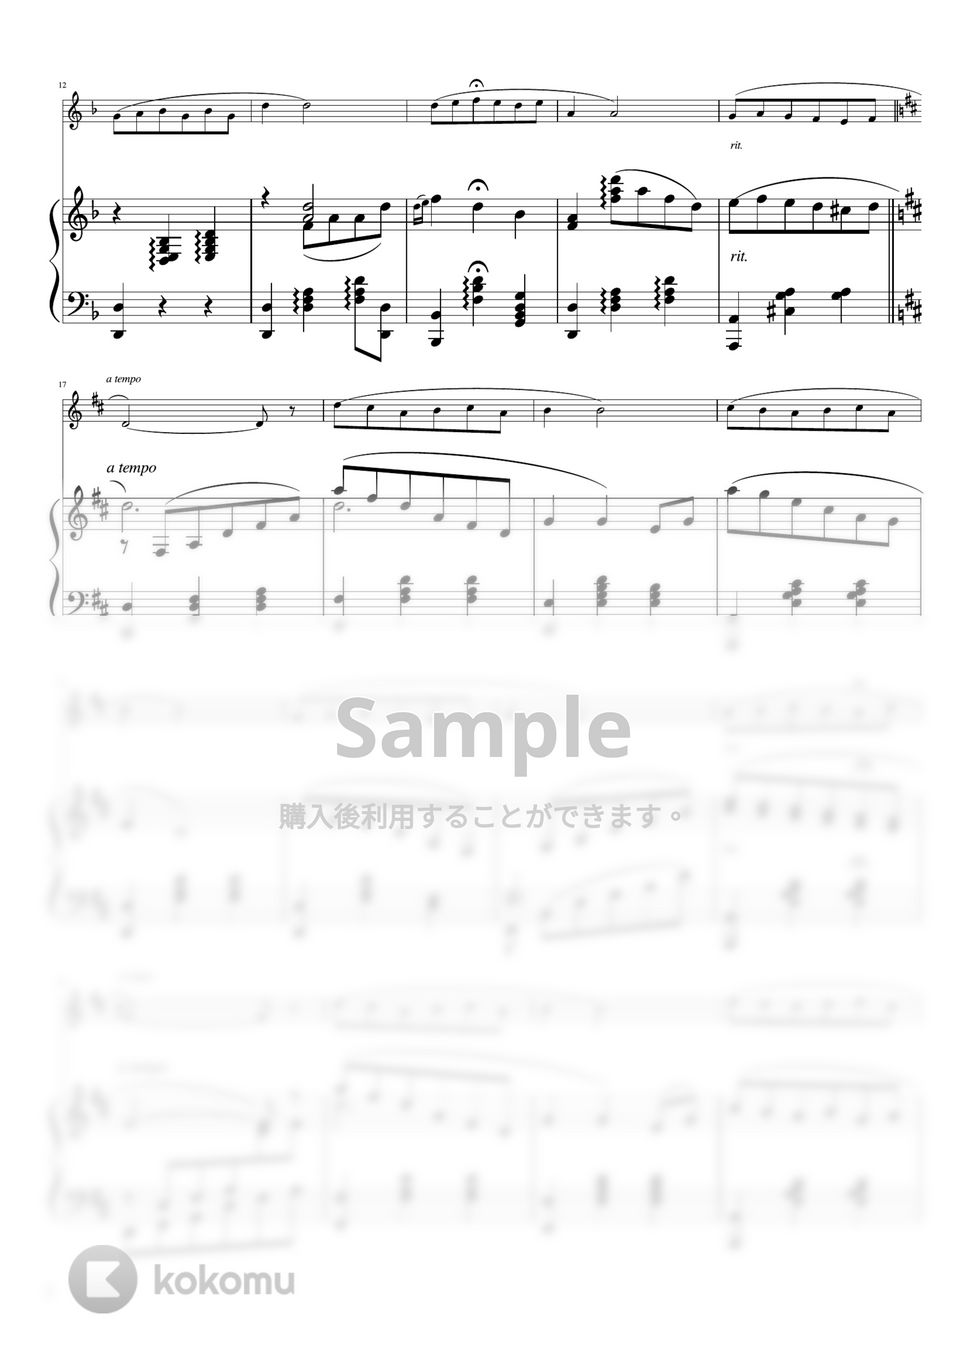 E.クルティス - 帰れソレントへ (D・バイオリン&ピアノ) by pfkaori